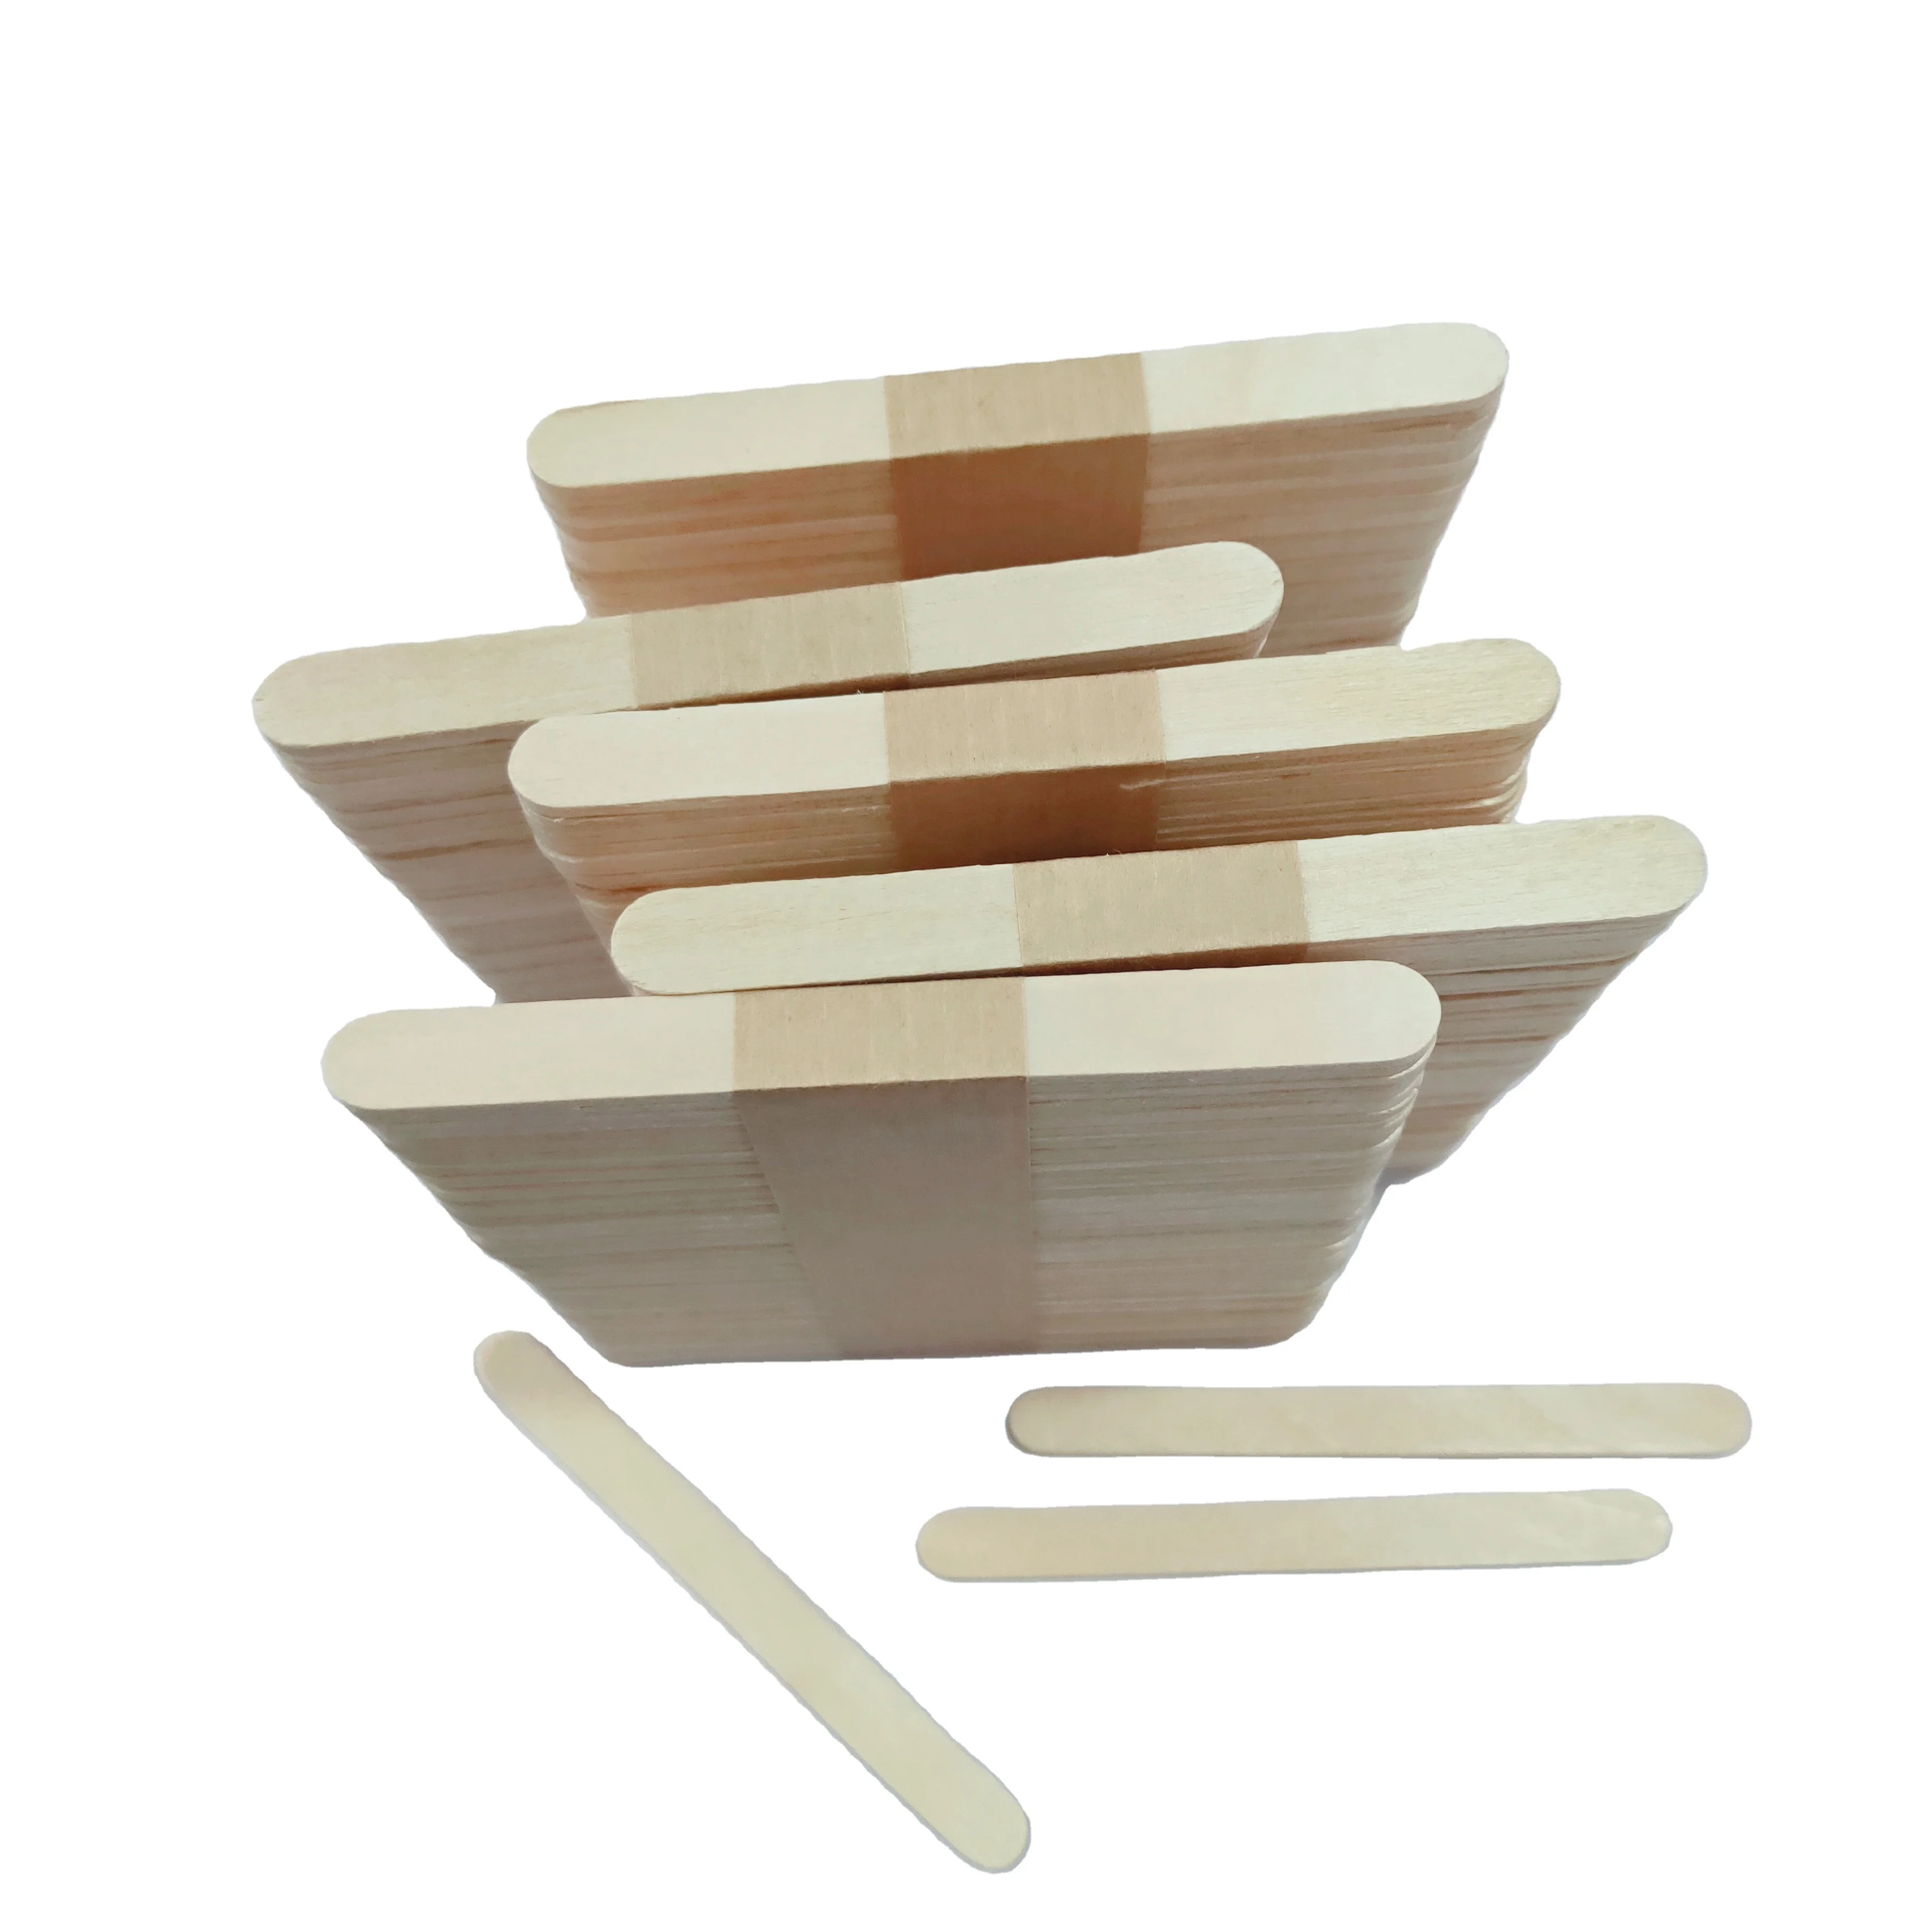 
Custom print logo wood popsicle sticks wooden ice cream sticks for sale 